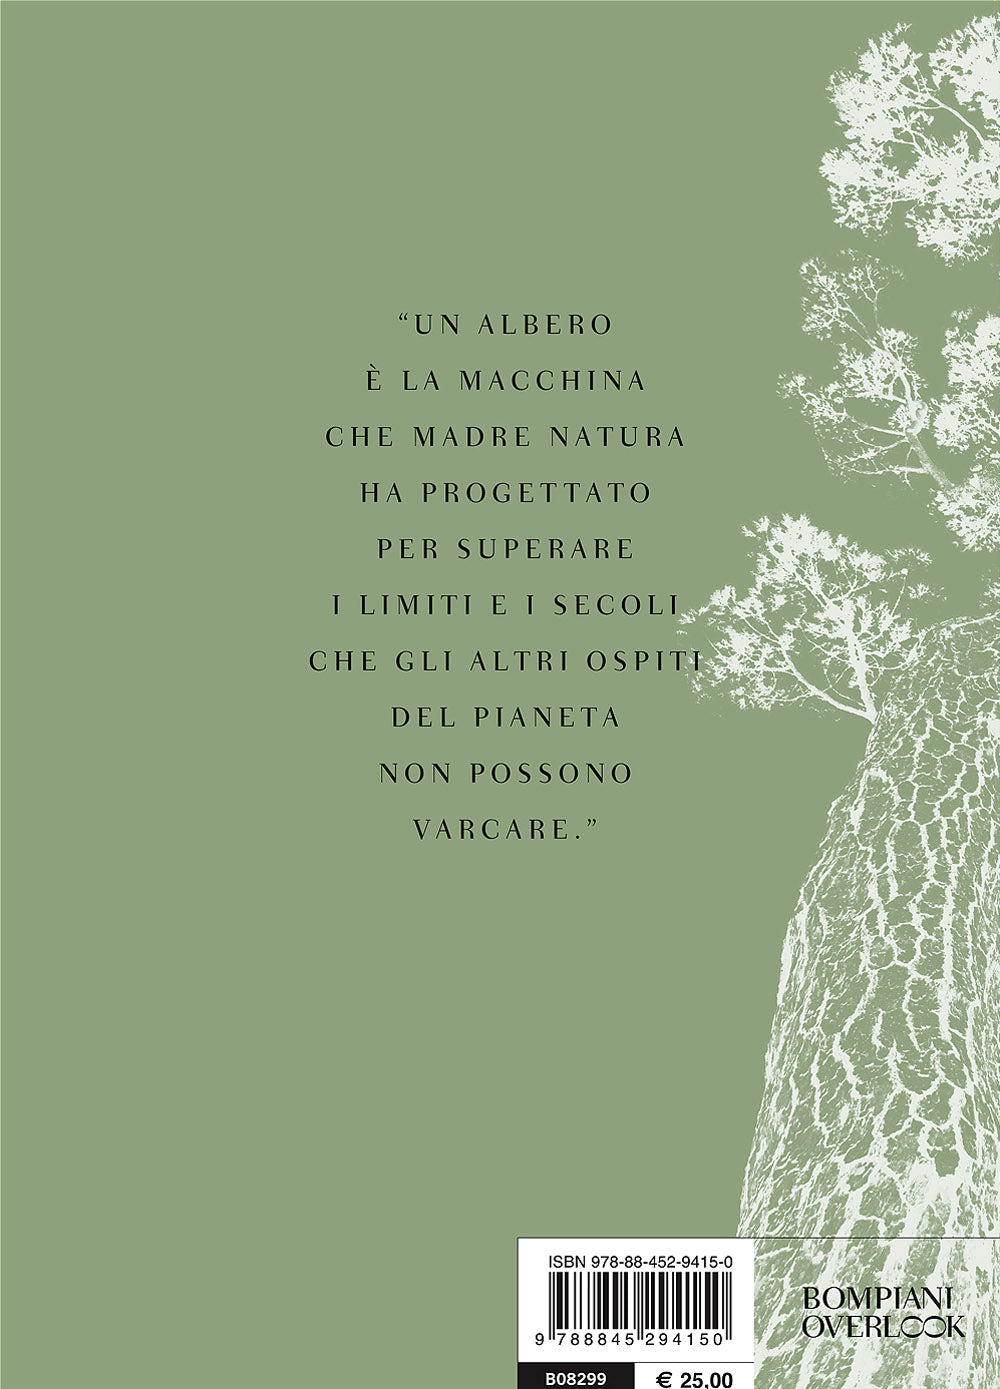 I giganti silenziosi::Gli alberi monumento delle città italiane